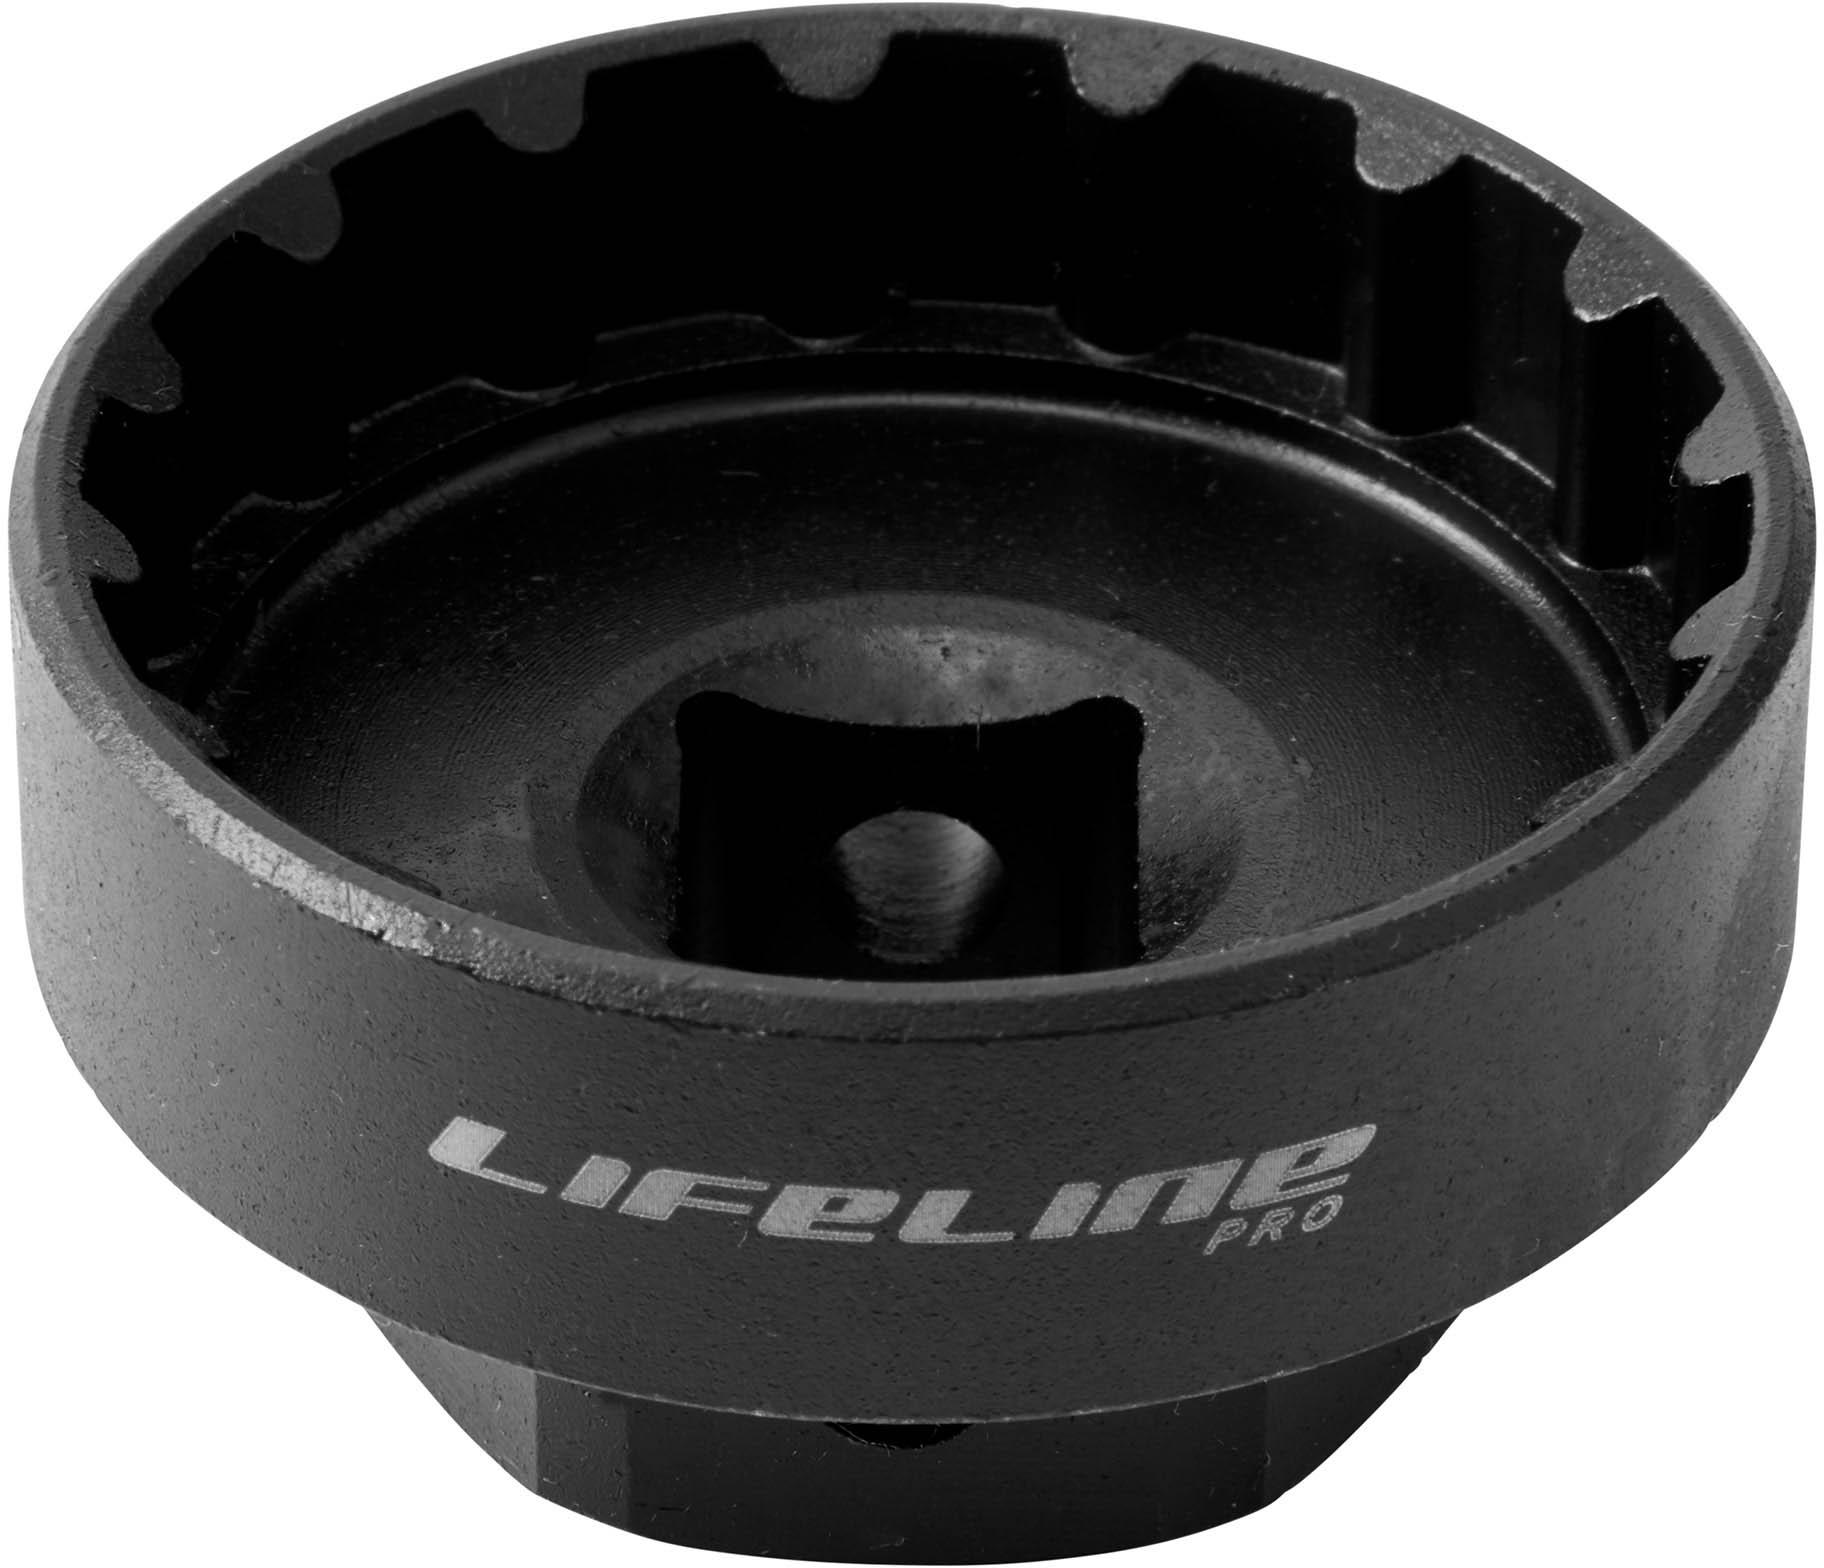 Lifeline Pro Shimano Bottom Bracket Tool  Black